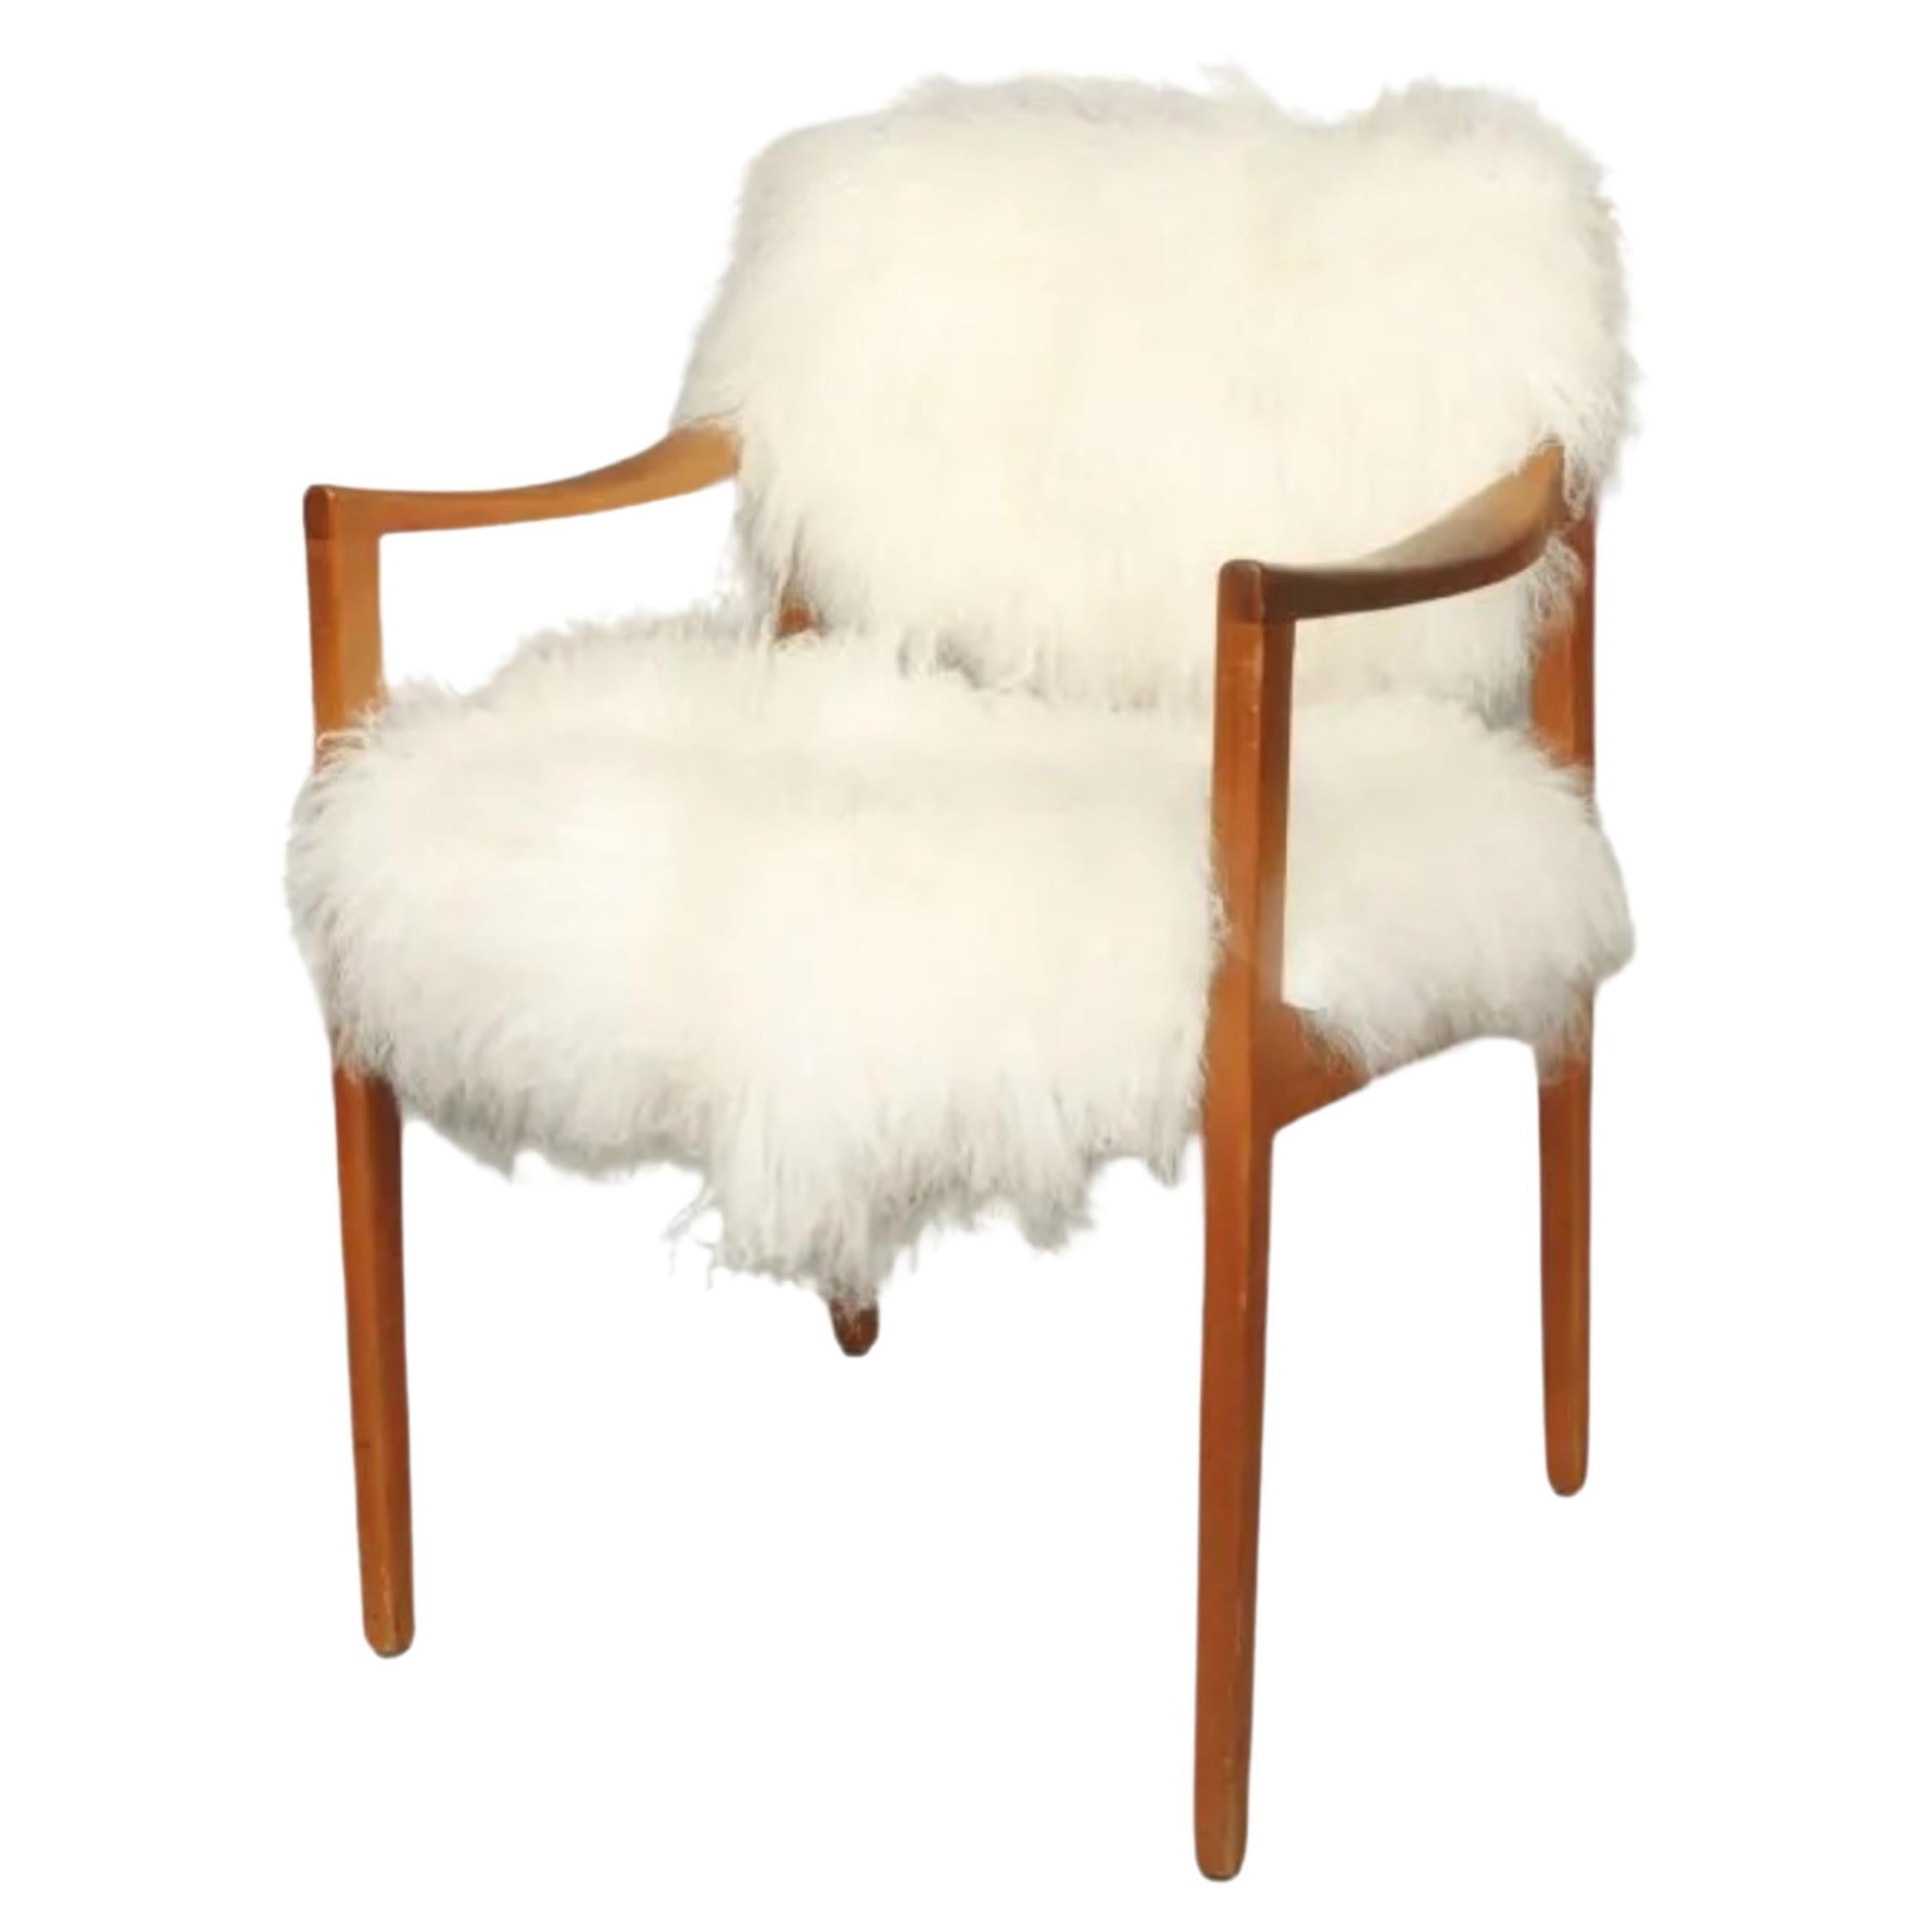 Mid-Century Teak Arm Chair With Mongolian Fur